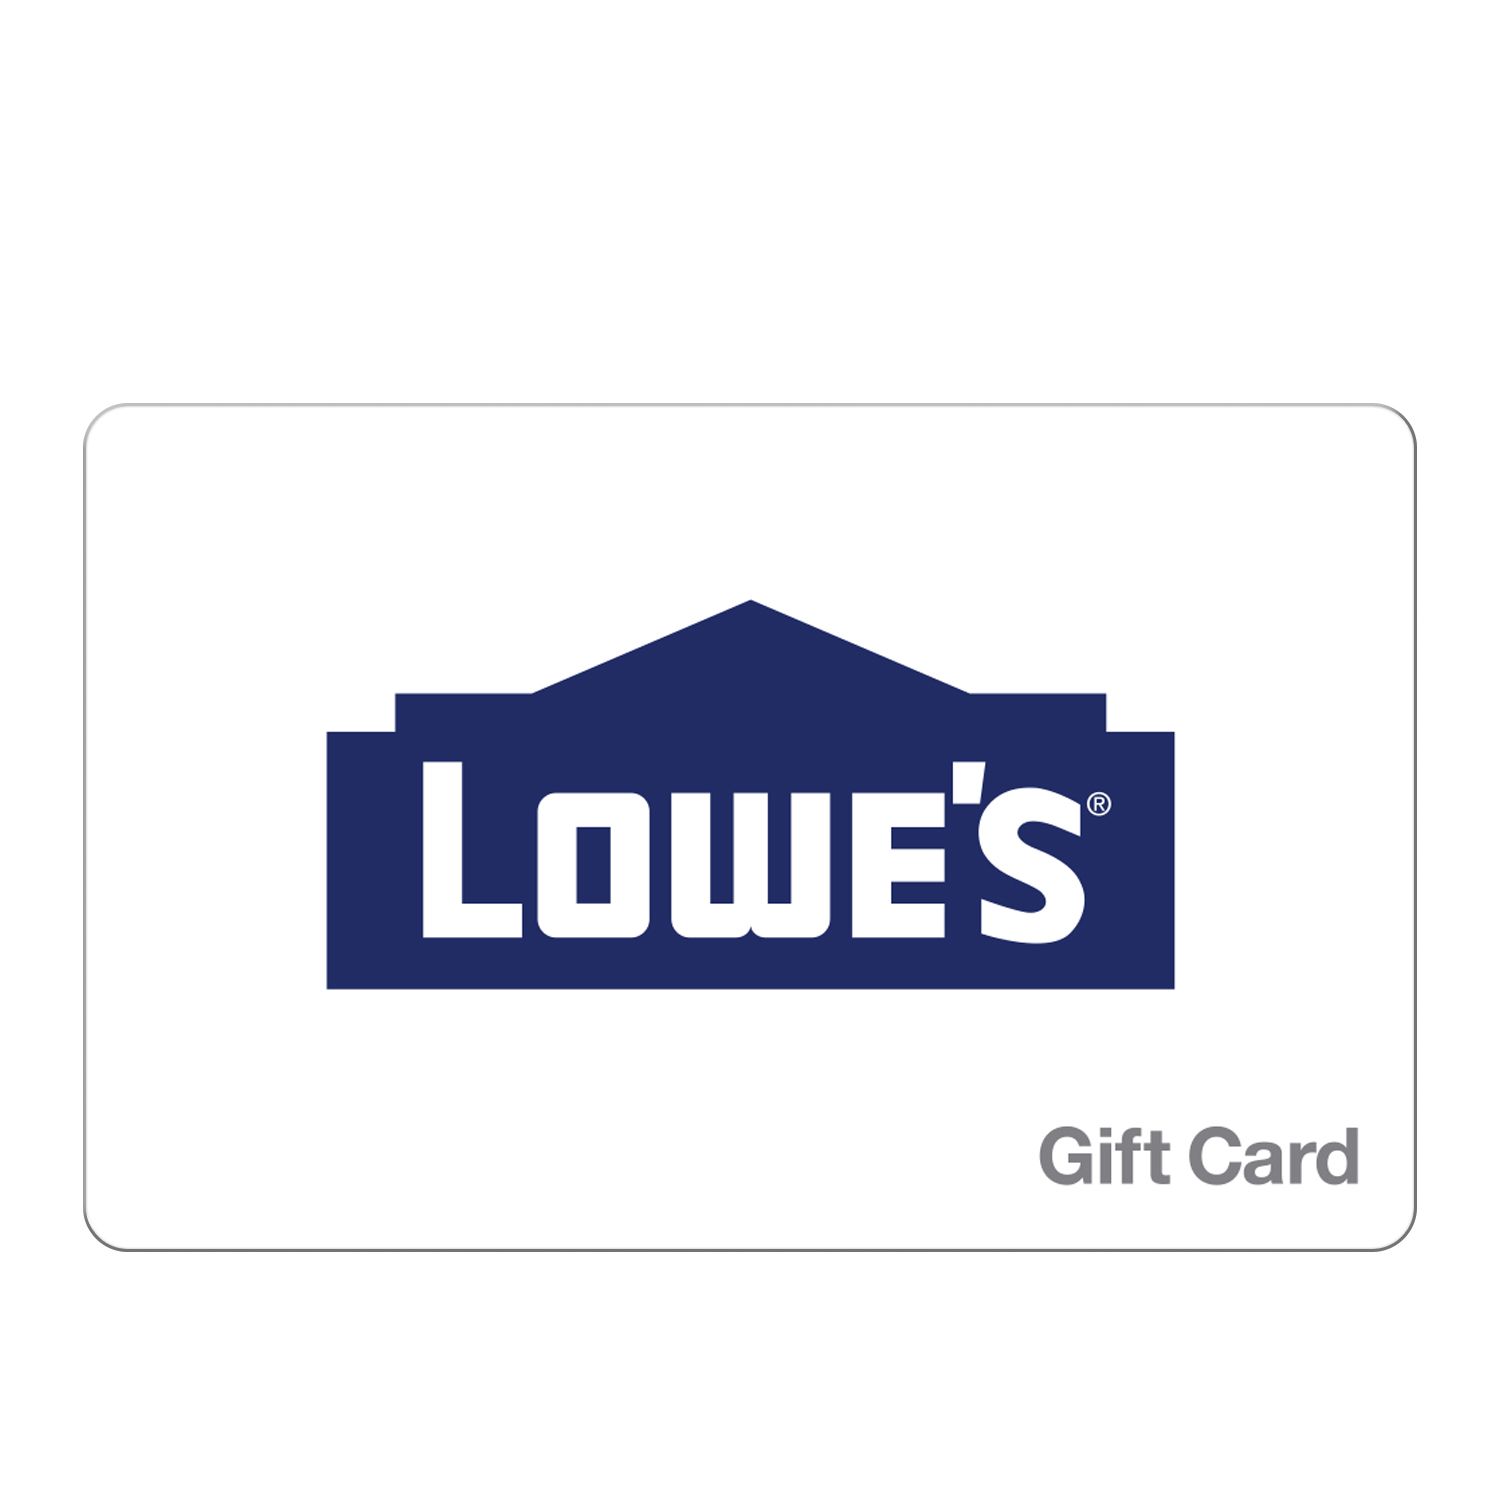 $25 Lowe's Gift Card, 3 pk.